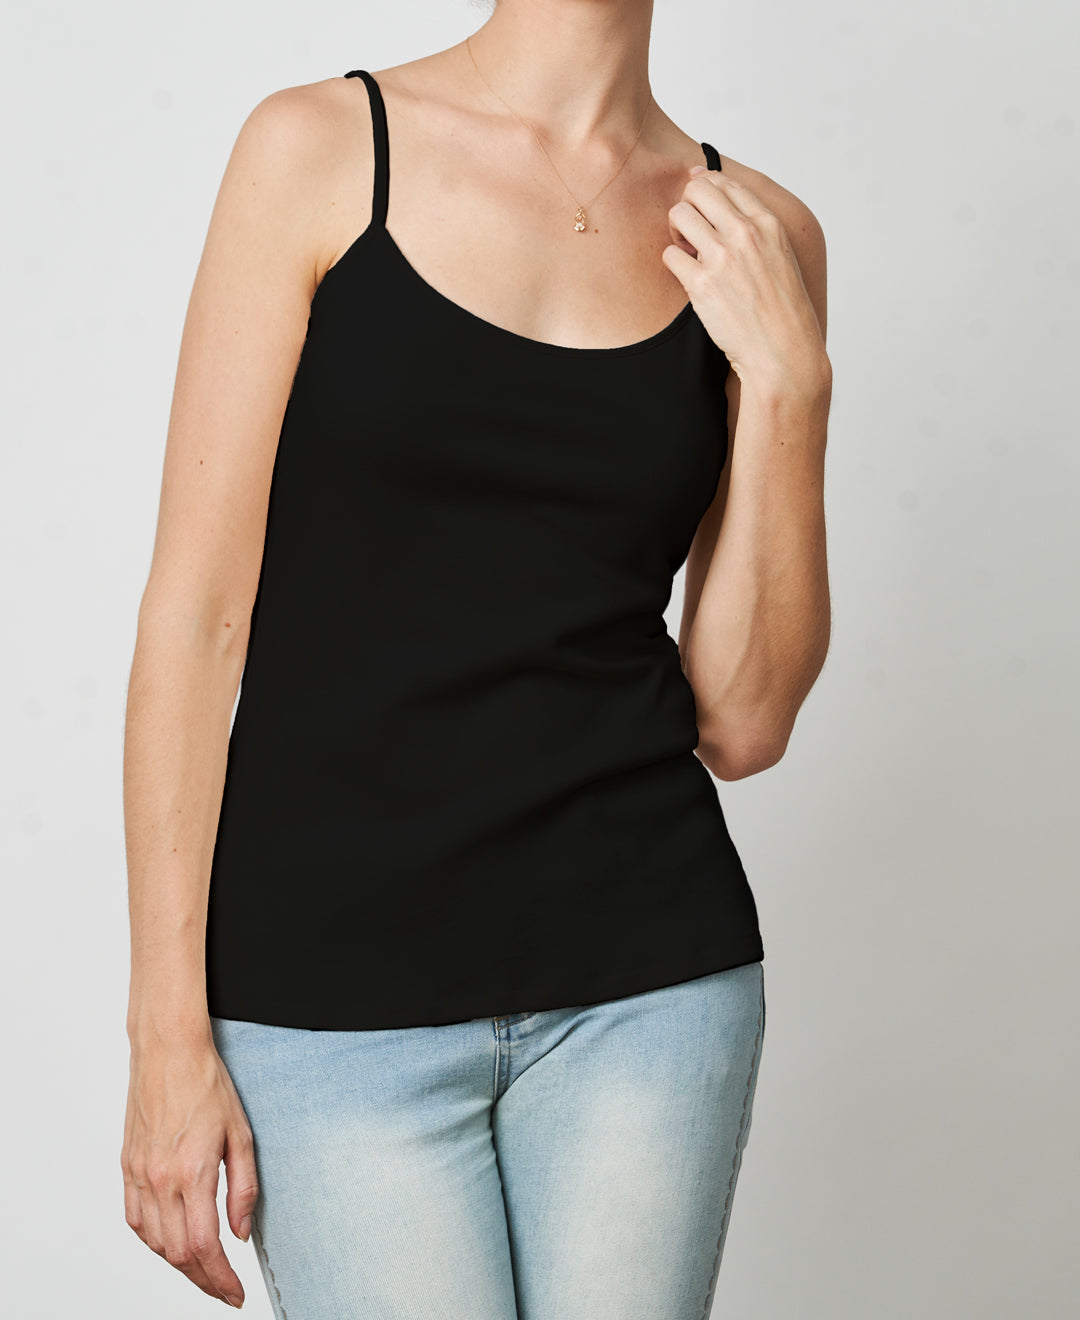 Premium AI Image  Isolated of Camisoles Lace Camis Adjustable Spaghetti  Straps on Black Ba White Blank Clean Fashion